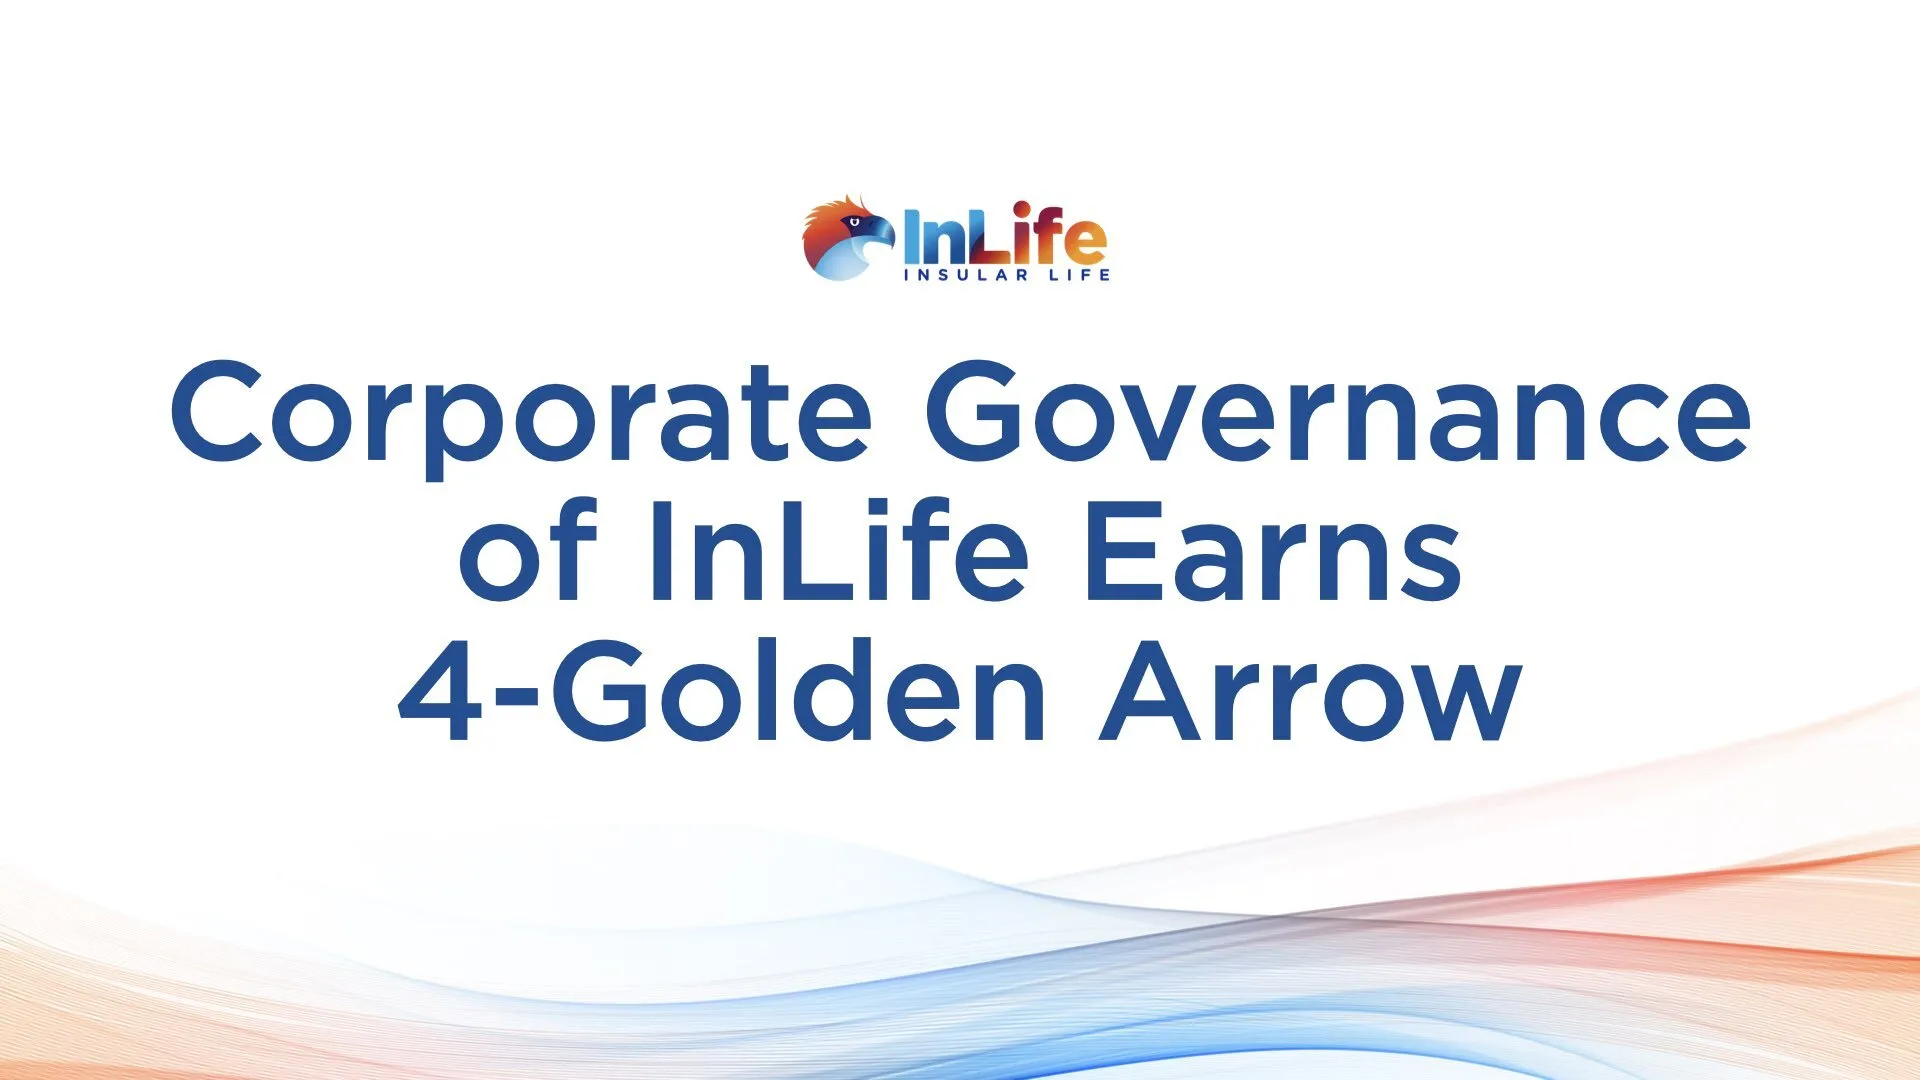 insular-life-corporate-governance-earns-4-golden-arrow-at-icd-awards